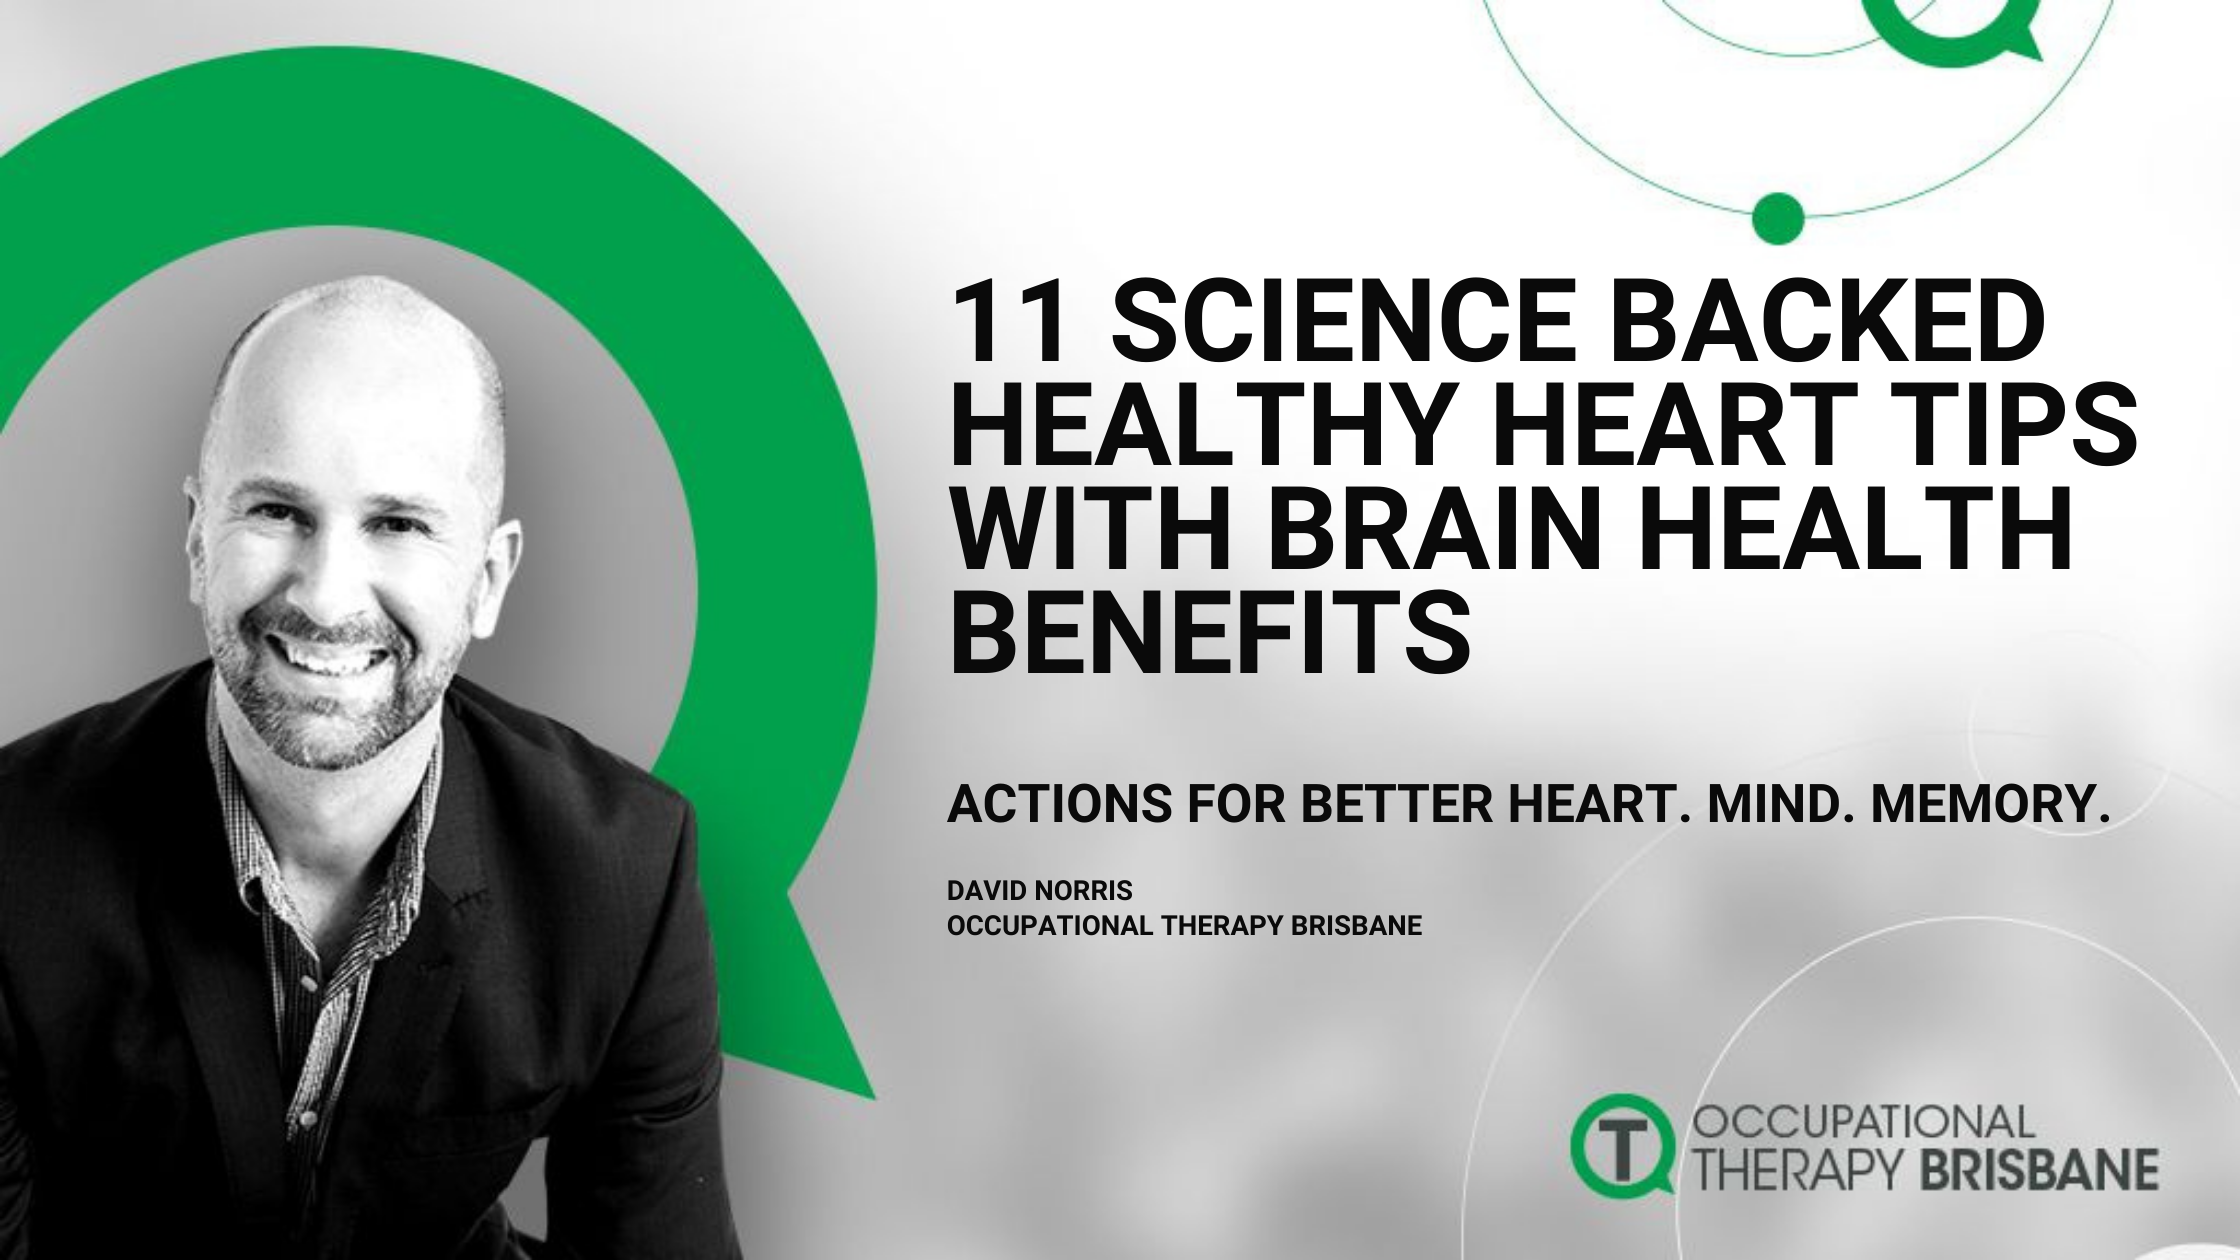 Take Brain Health to Heart